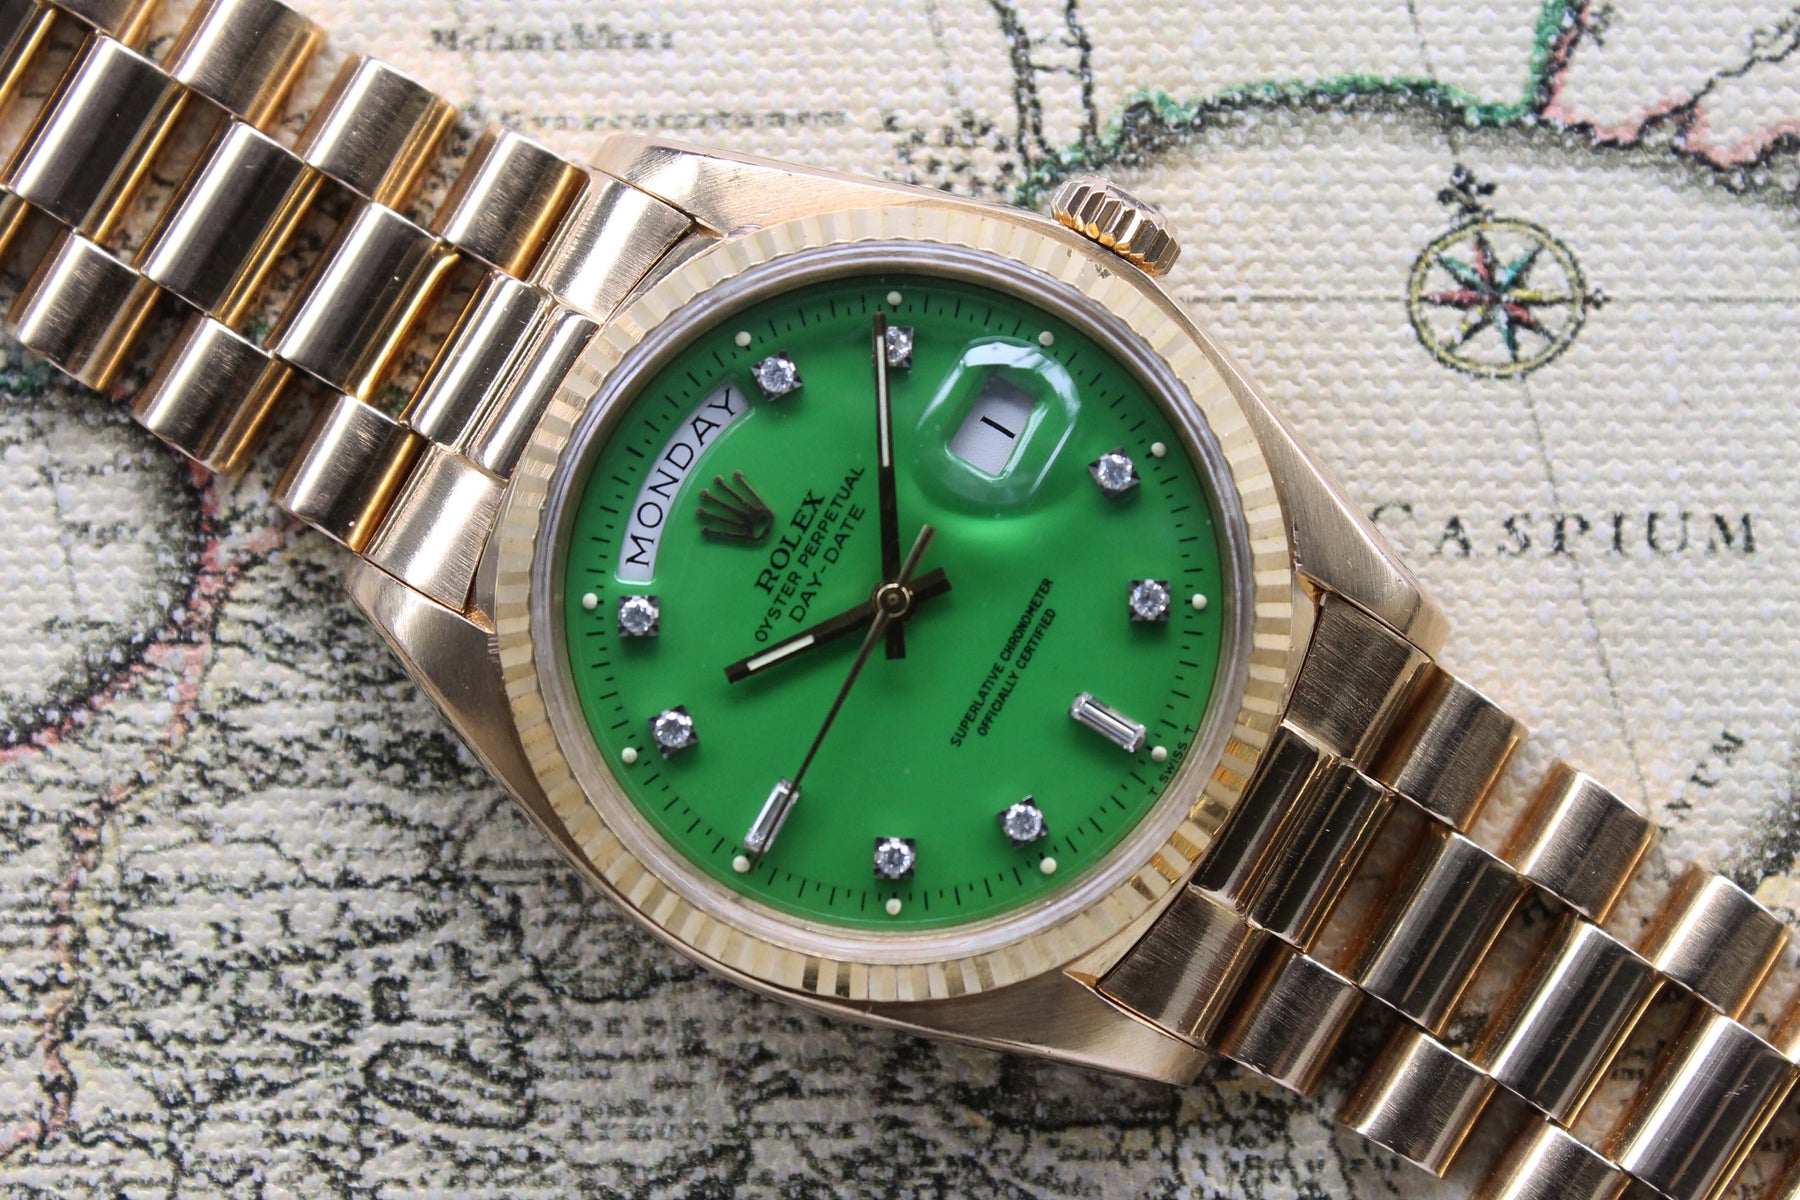 1973 Rolex Day Date Stella Green Diamond Dial Ref. 1803